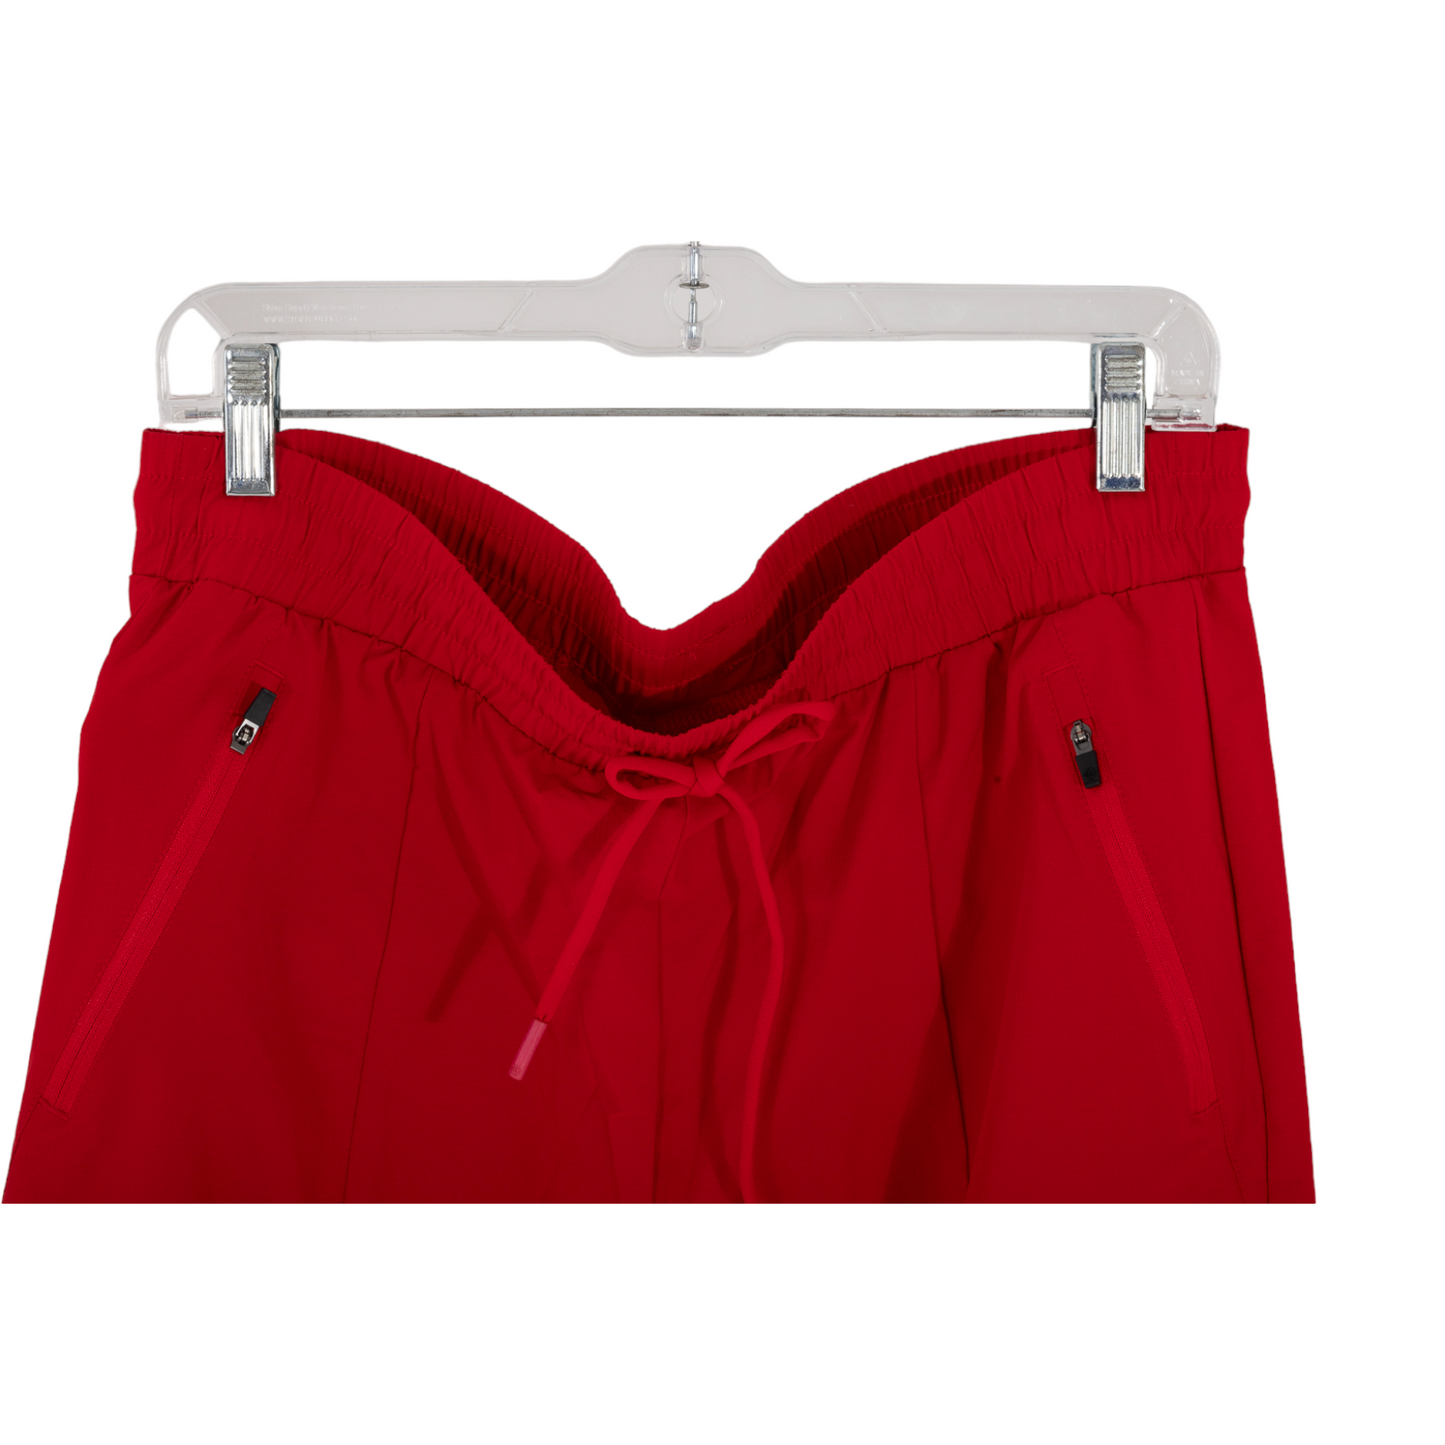 Surge Shorts : RED